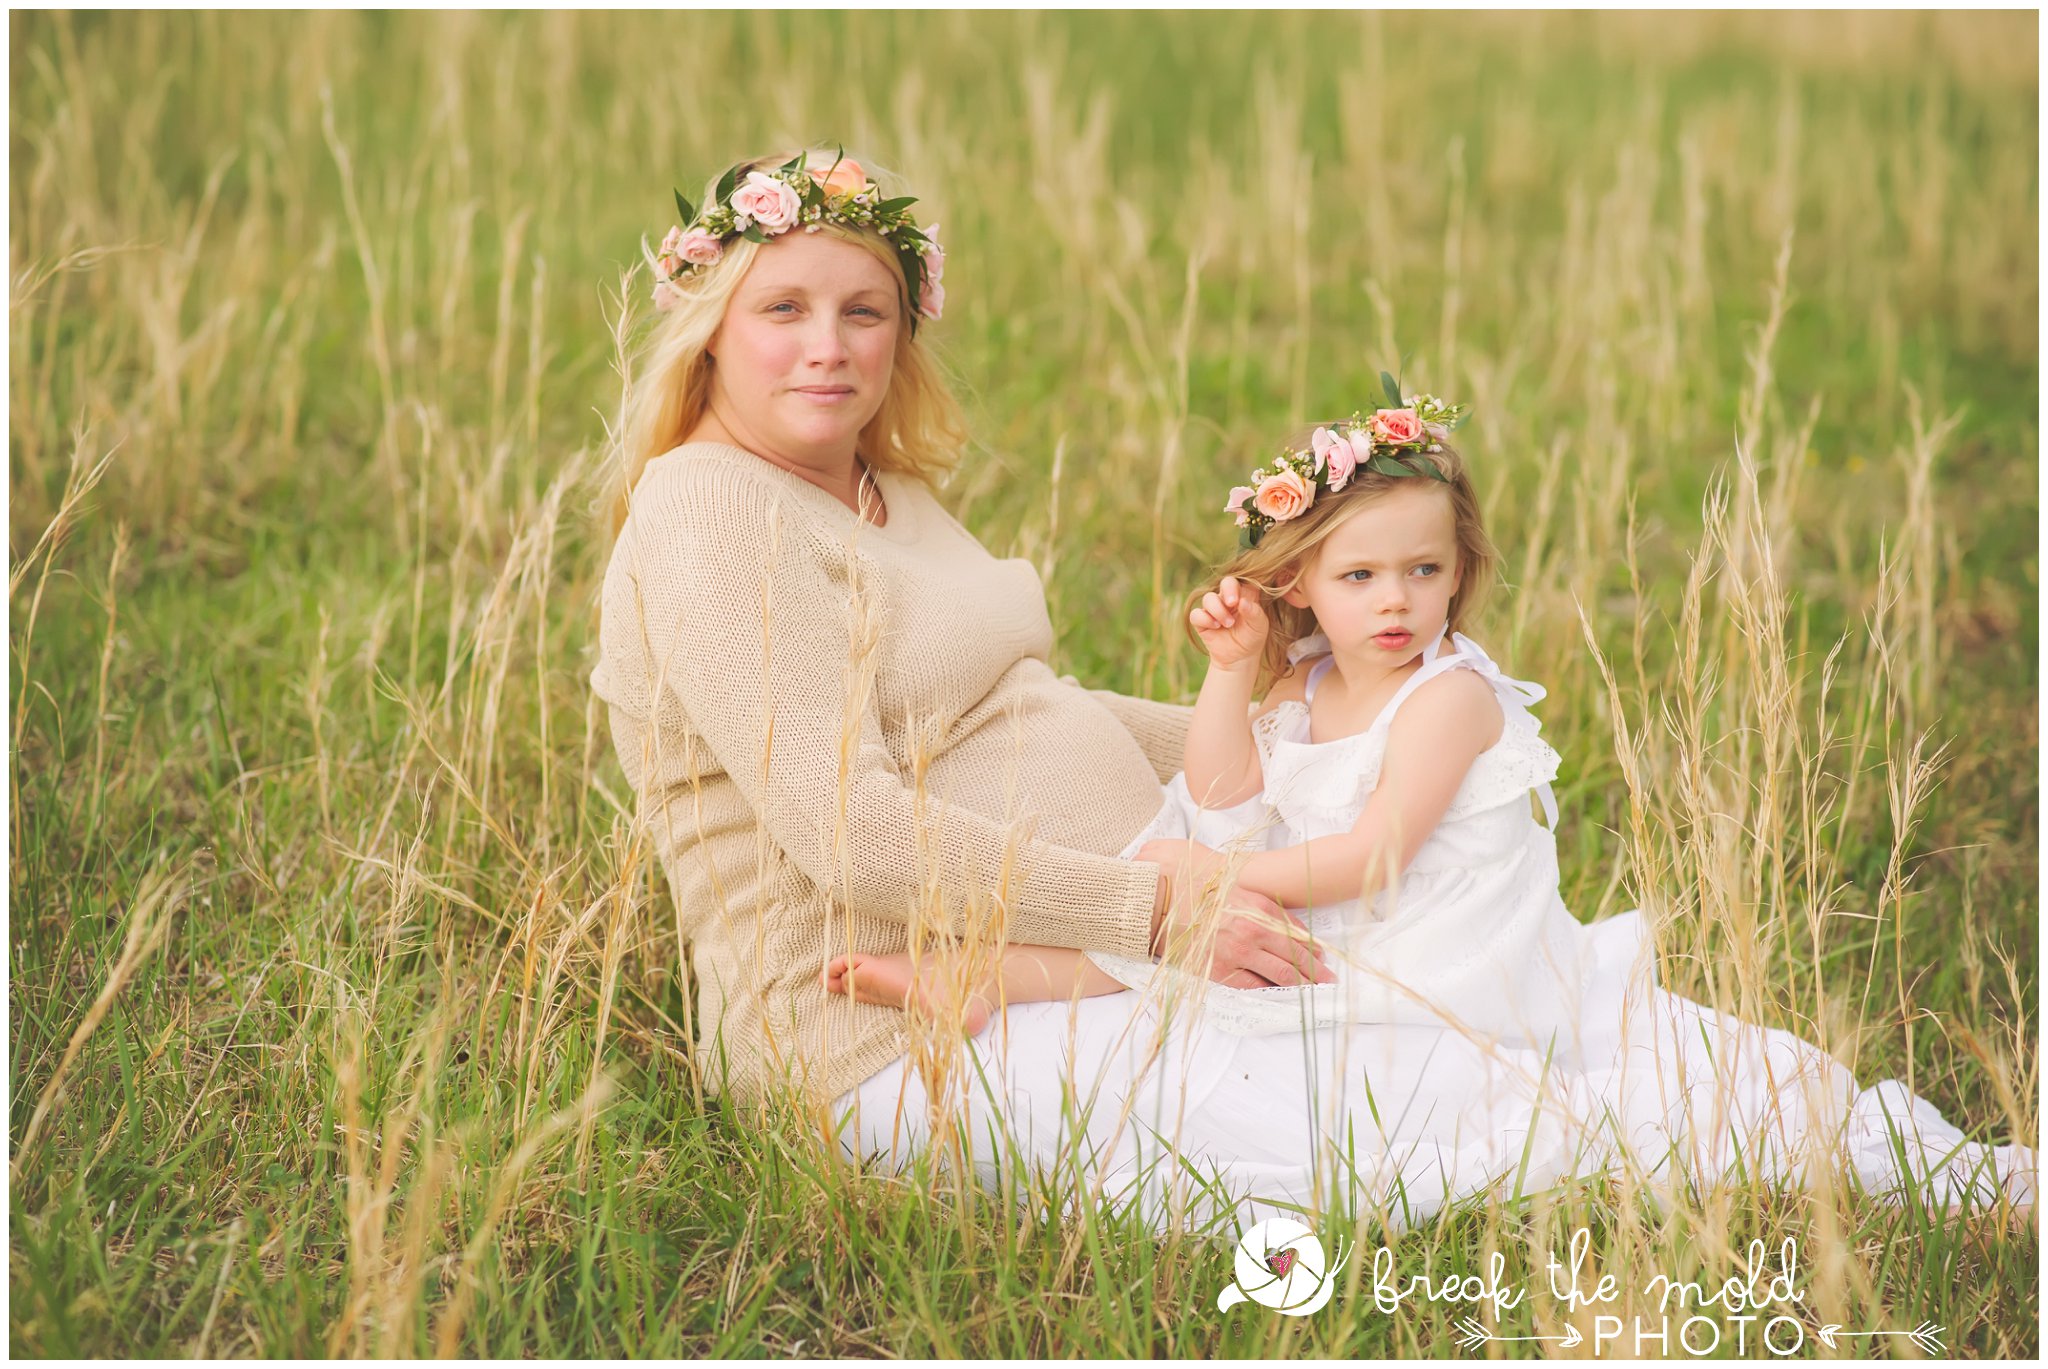 break-the-mold-photo-maternity-field-mommy-me-flower-floral-crown_2162.jpg